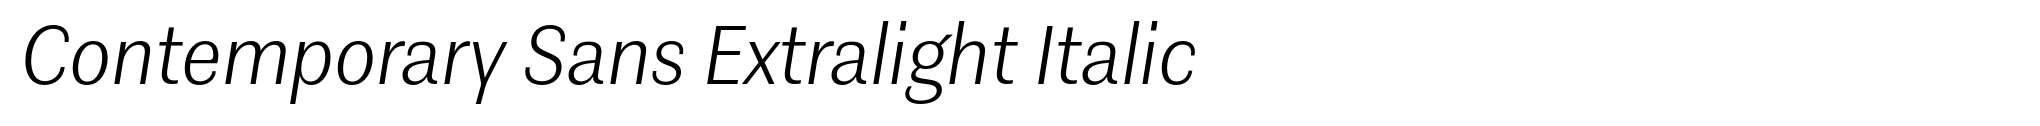 Contemporary Sans Extralight Italic image